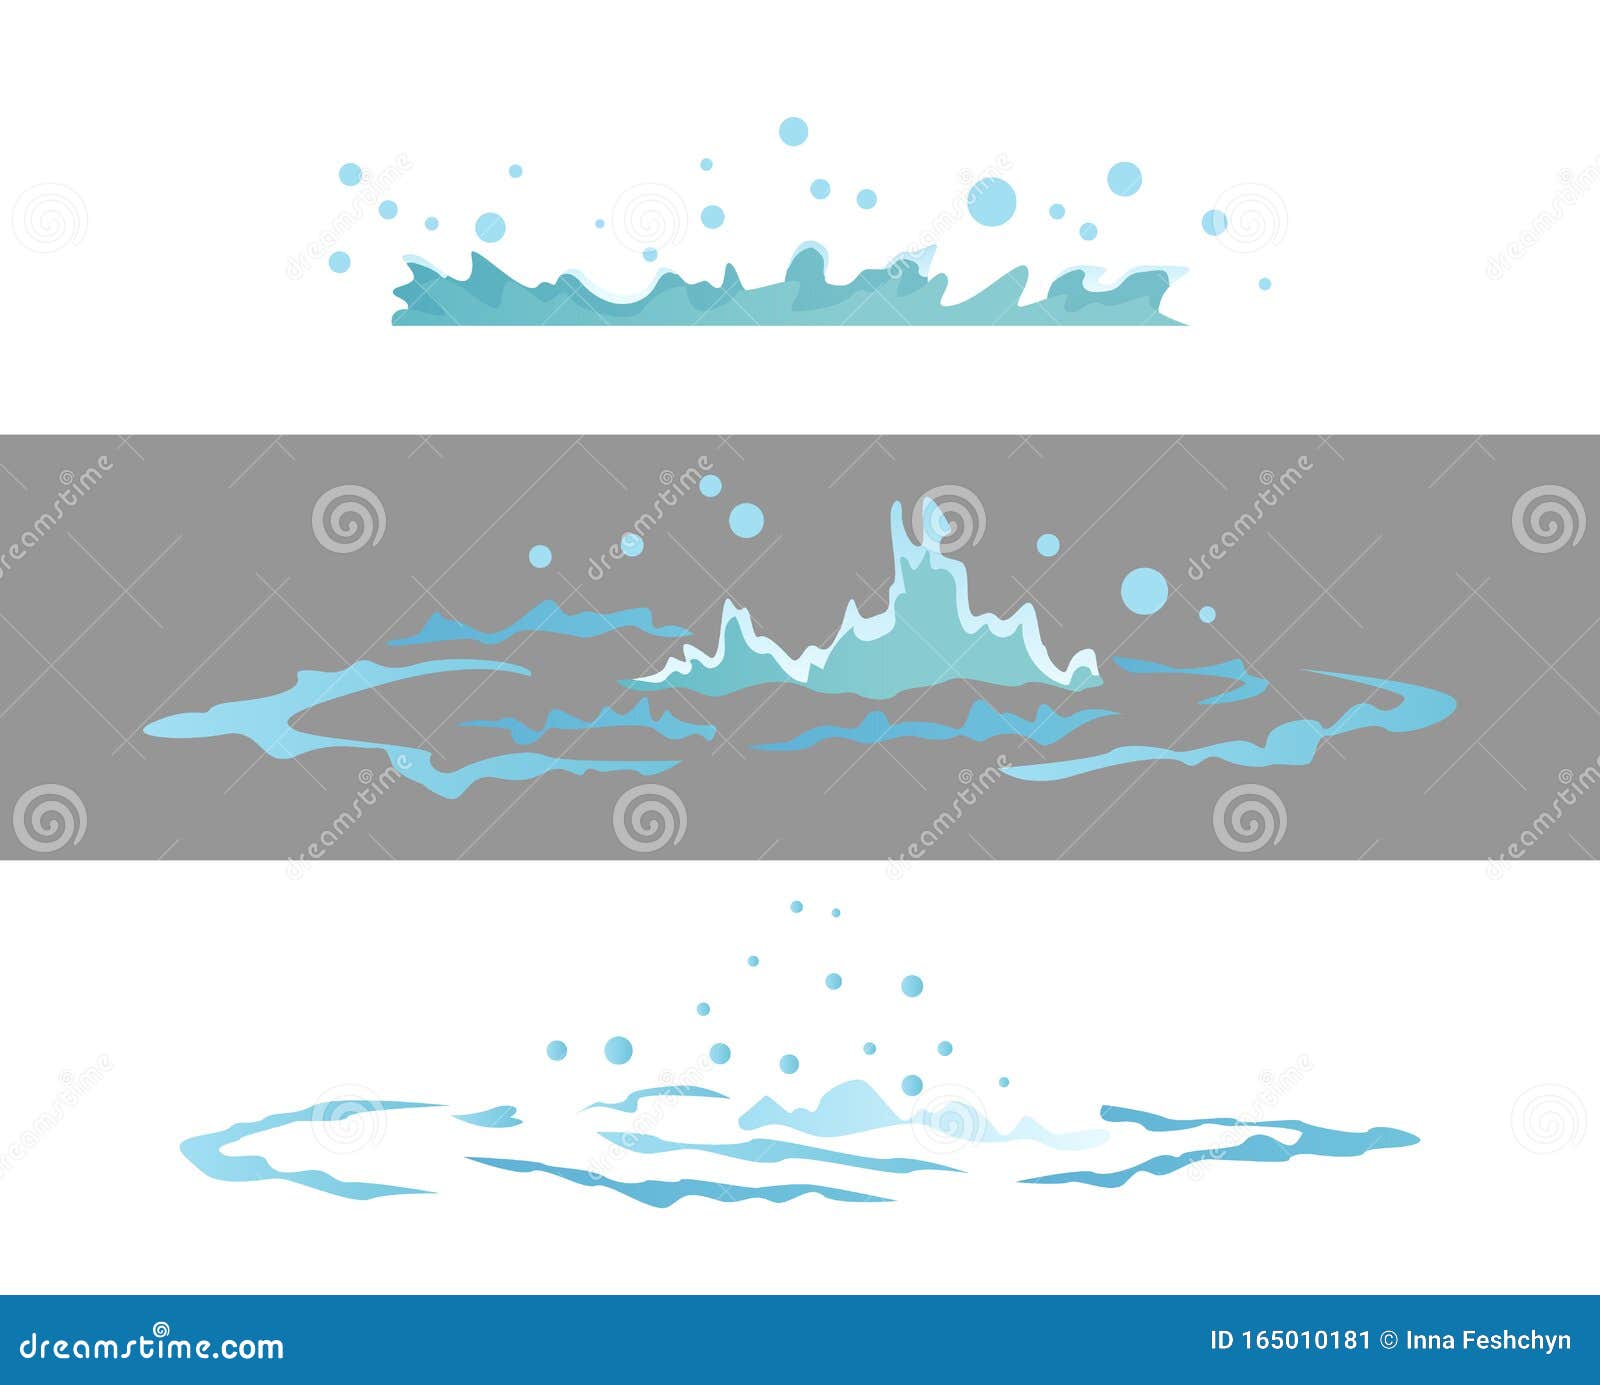 water ripple effect in flash